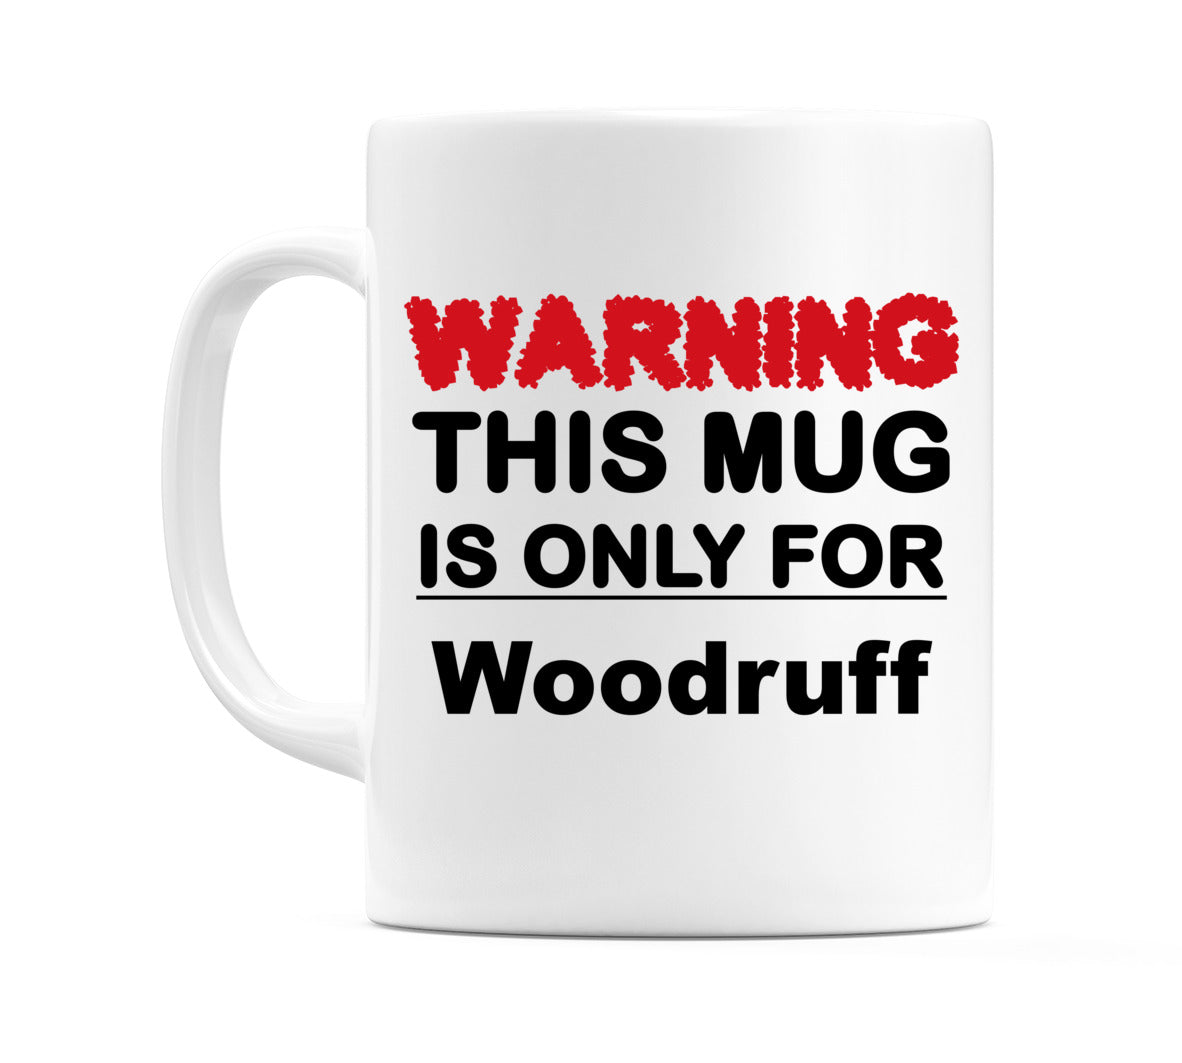 Warning This Mug is ONLY for Woodruff Mug